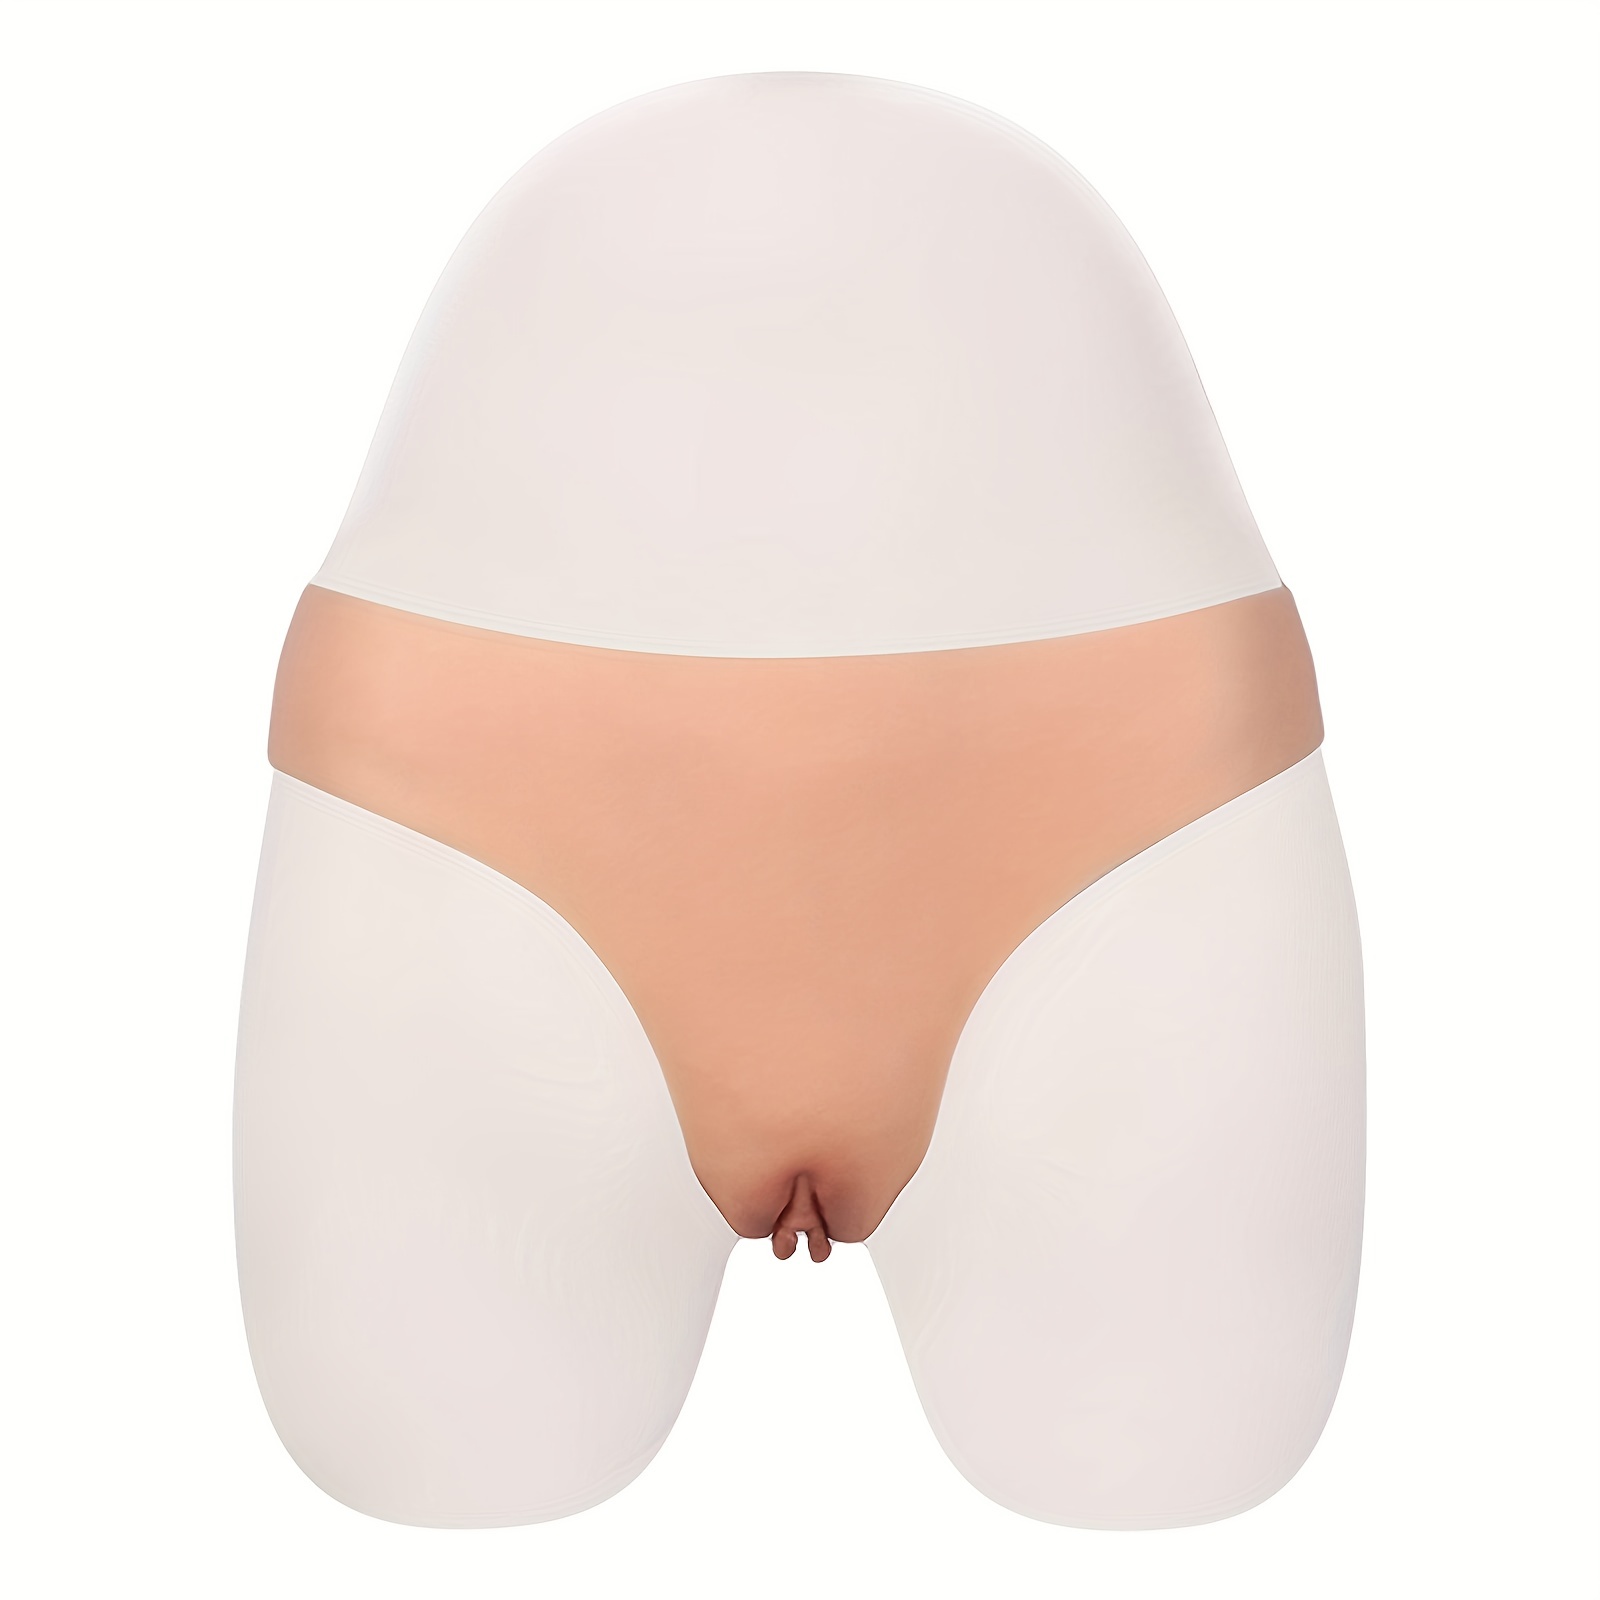 Silicone Vagina Panty, Realistic Fake Vaginal Transgender Artificial Sex Fake Vagina Underwear For Crossdressers pic